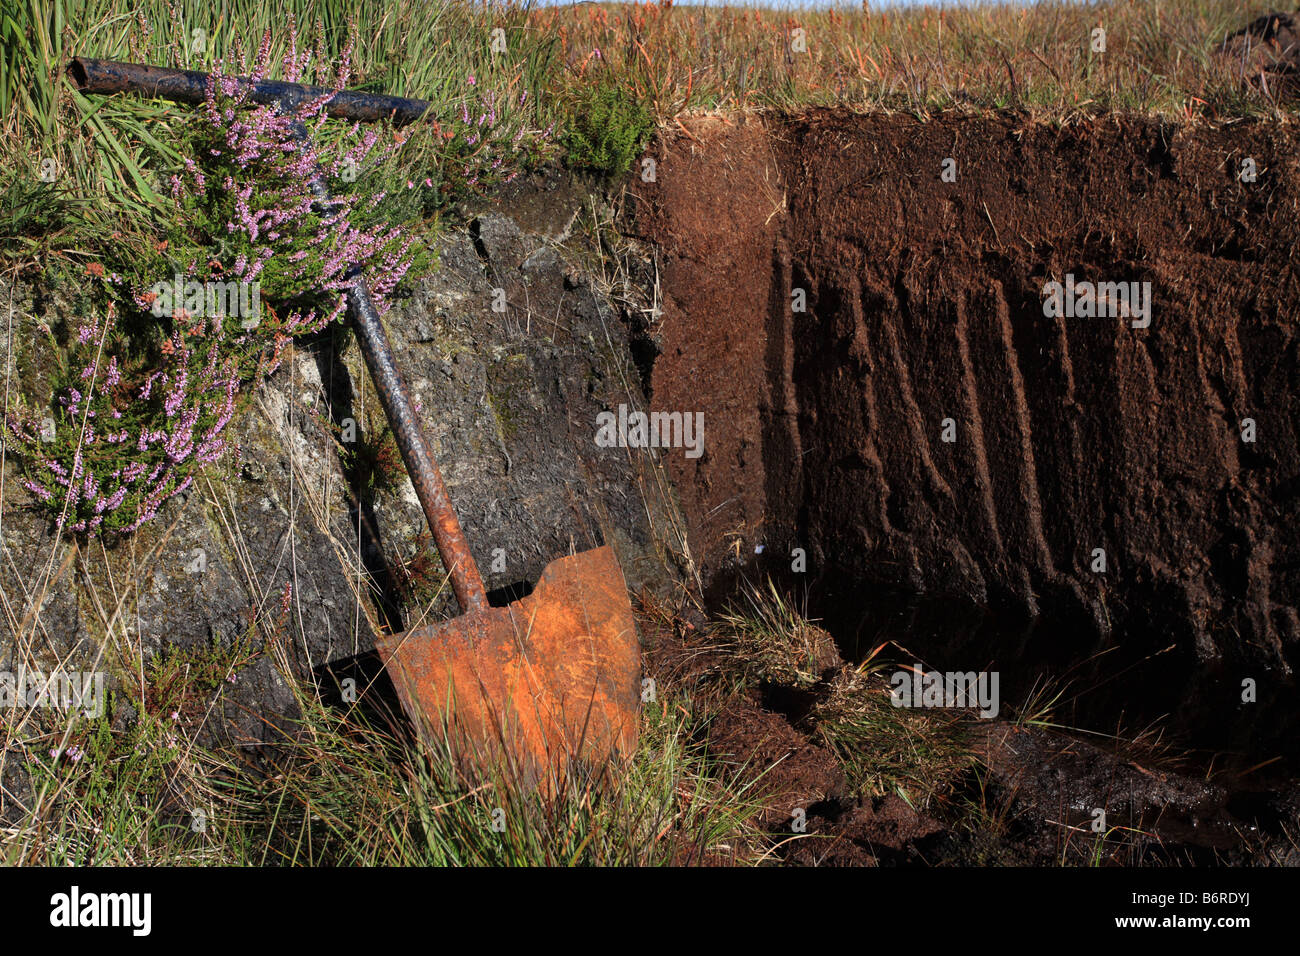 Peat cutting, spade, Isle of Islay, Scotland. Peat is used as a winter fuel. Stock Photo